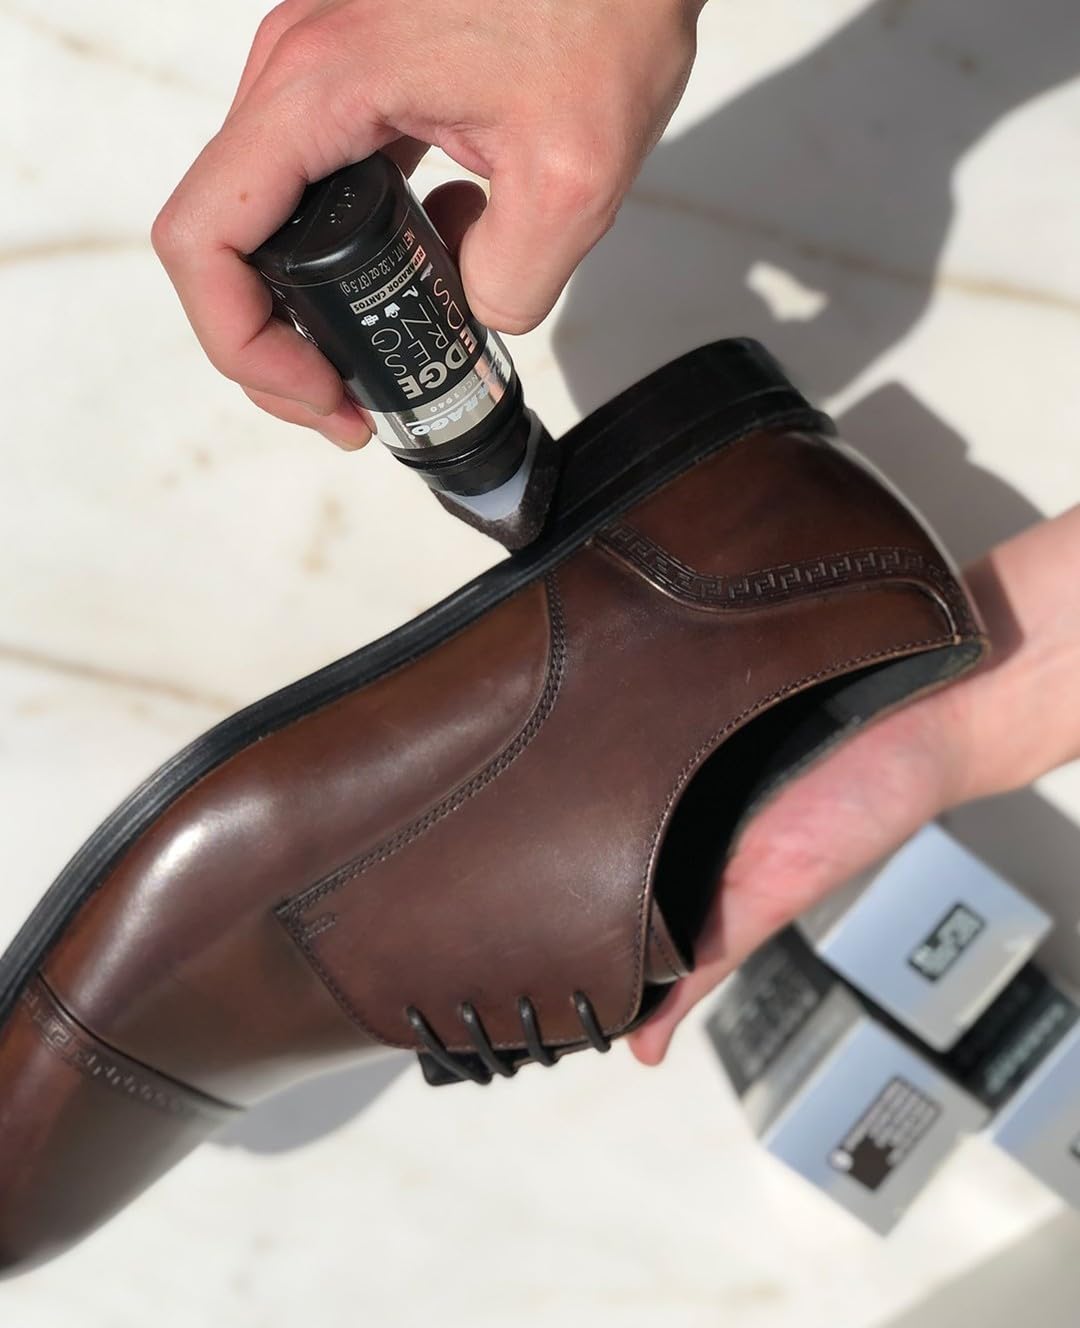 Tarrago Edge Dressing Shoe Dye - 35 ml Sole & Heel Edge Dressing, Repairs & Color Coat Leather Shoes Edges - Rubber & Leather Shoe Sole Edge & Heel Polish for Boots & Footwear - Black #18